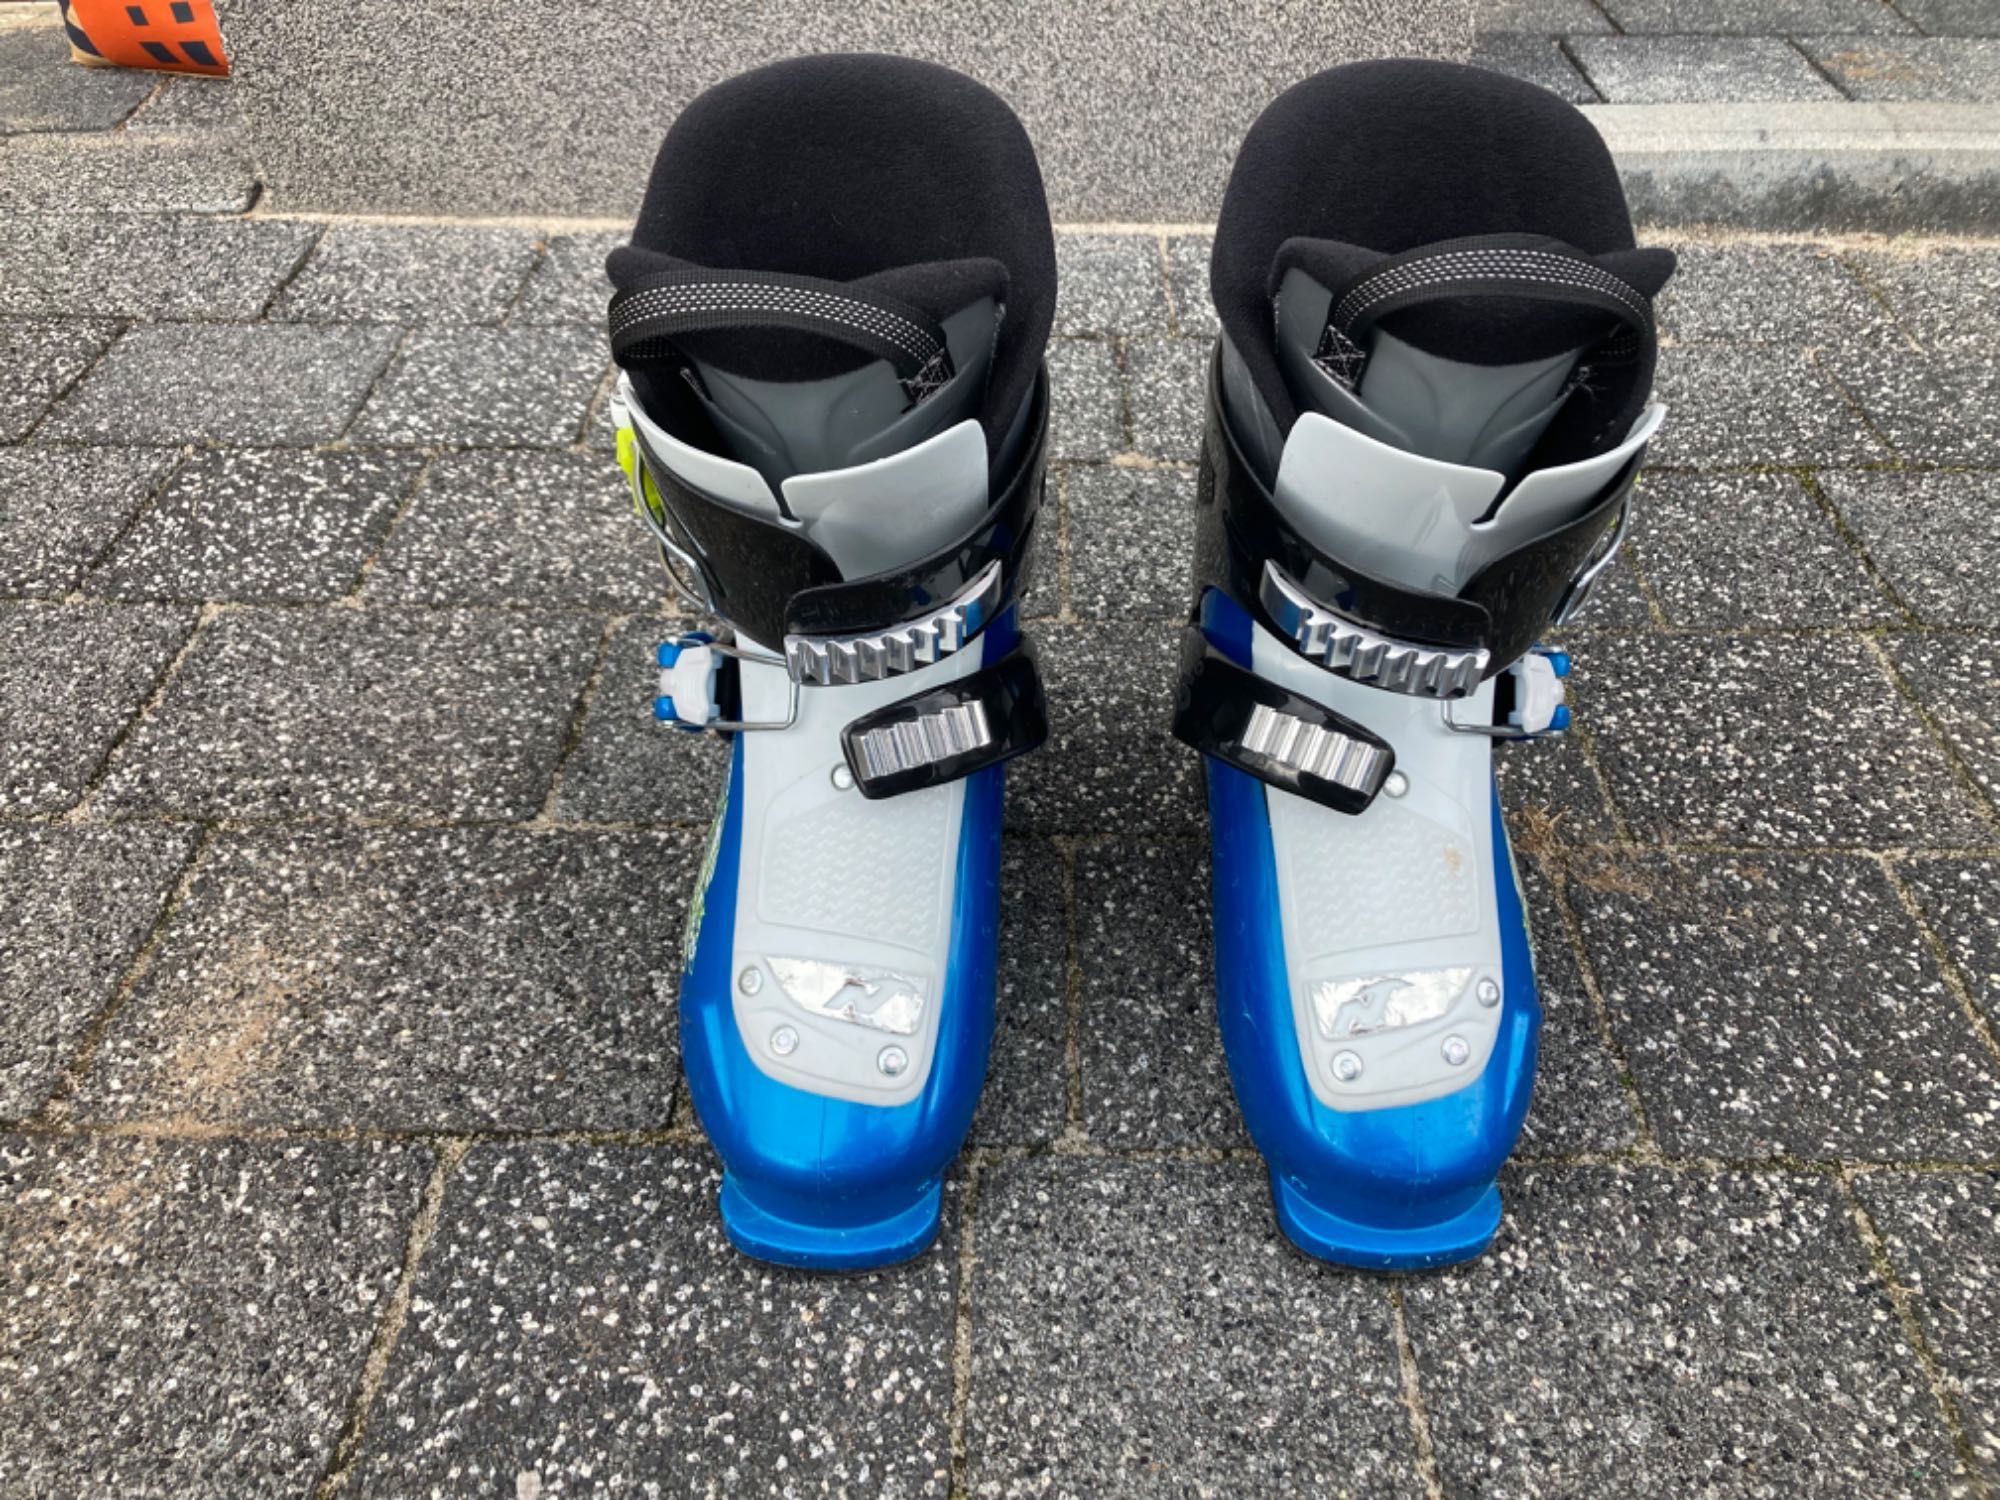 Komplet narciarski dla chłopca - narty 90 / buty 20